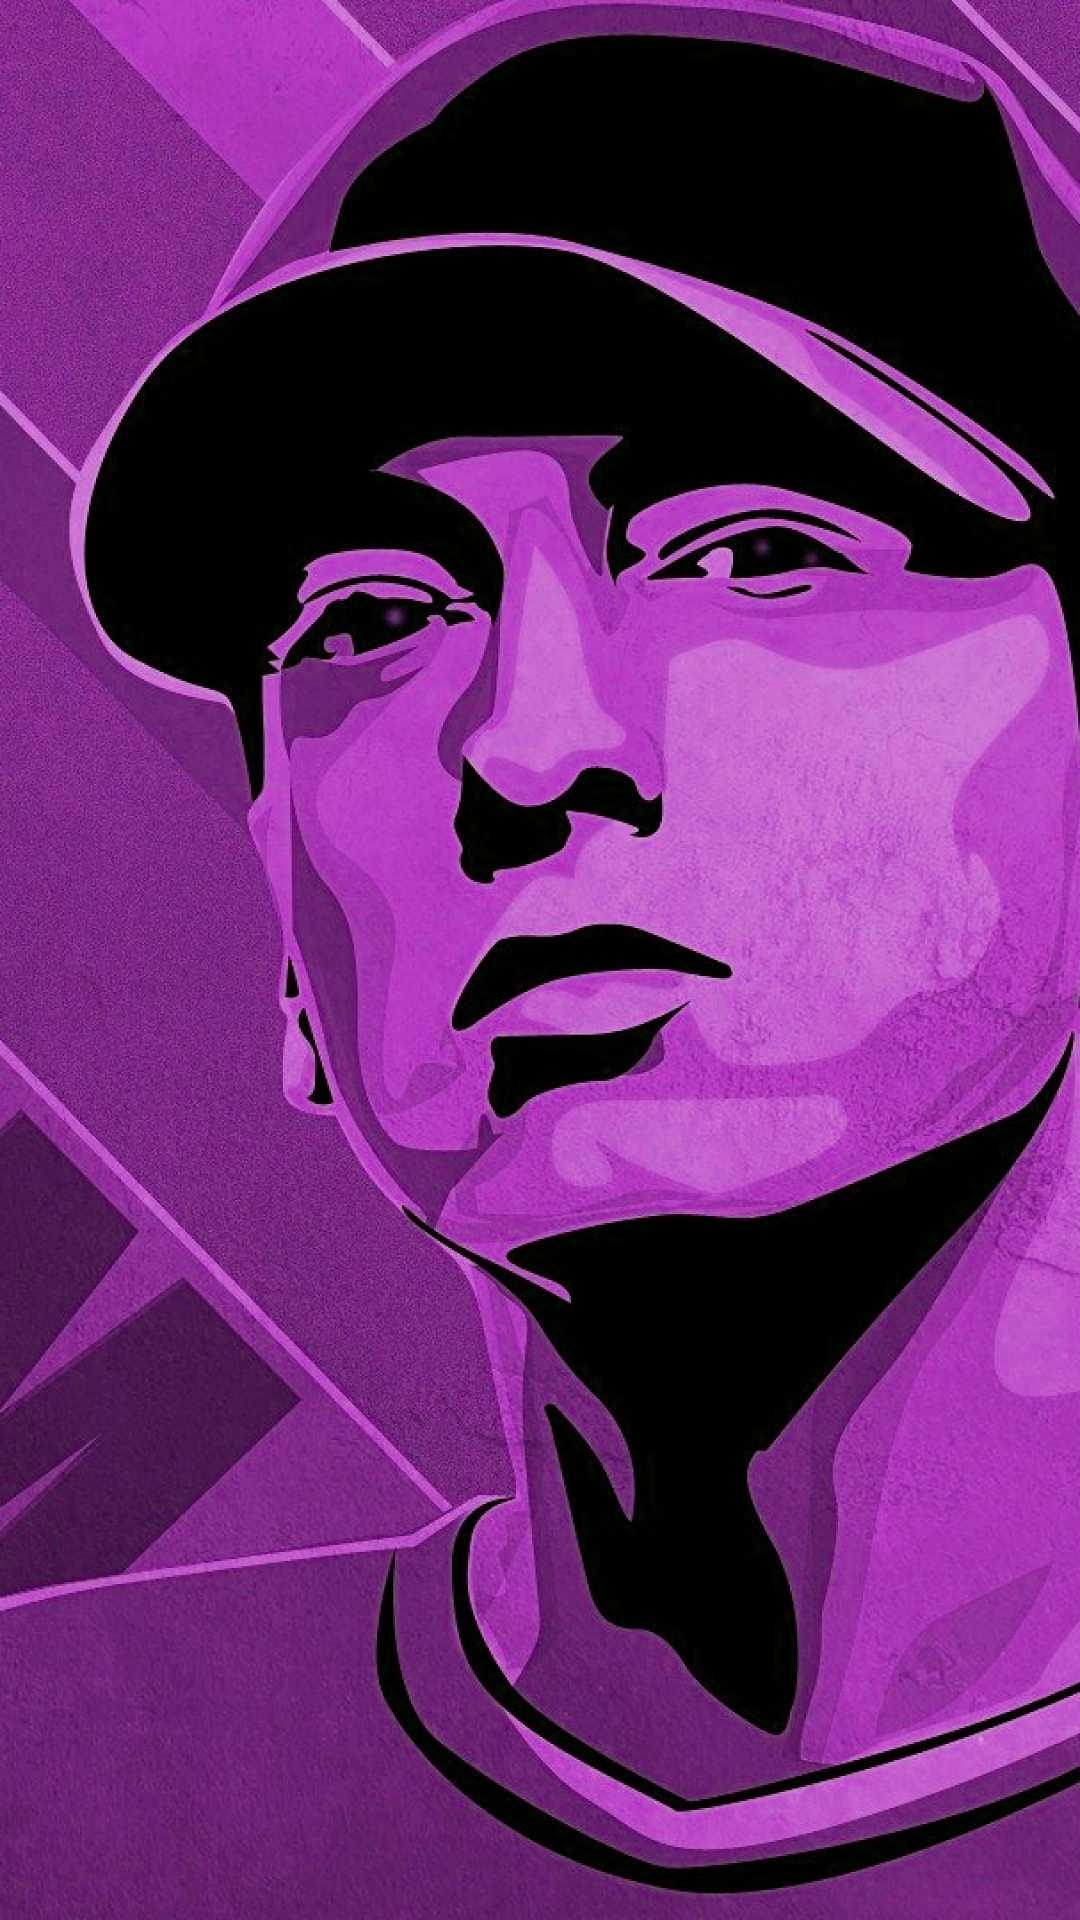 Eminem wallpapers vertical